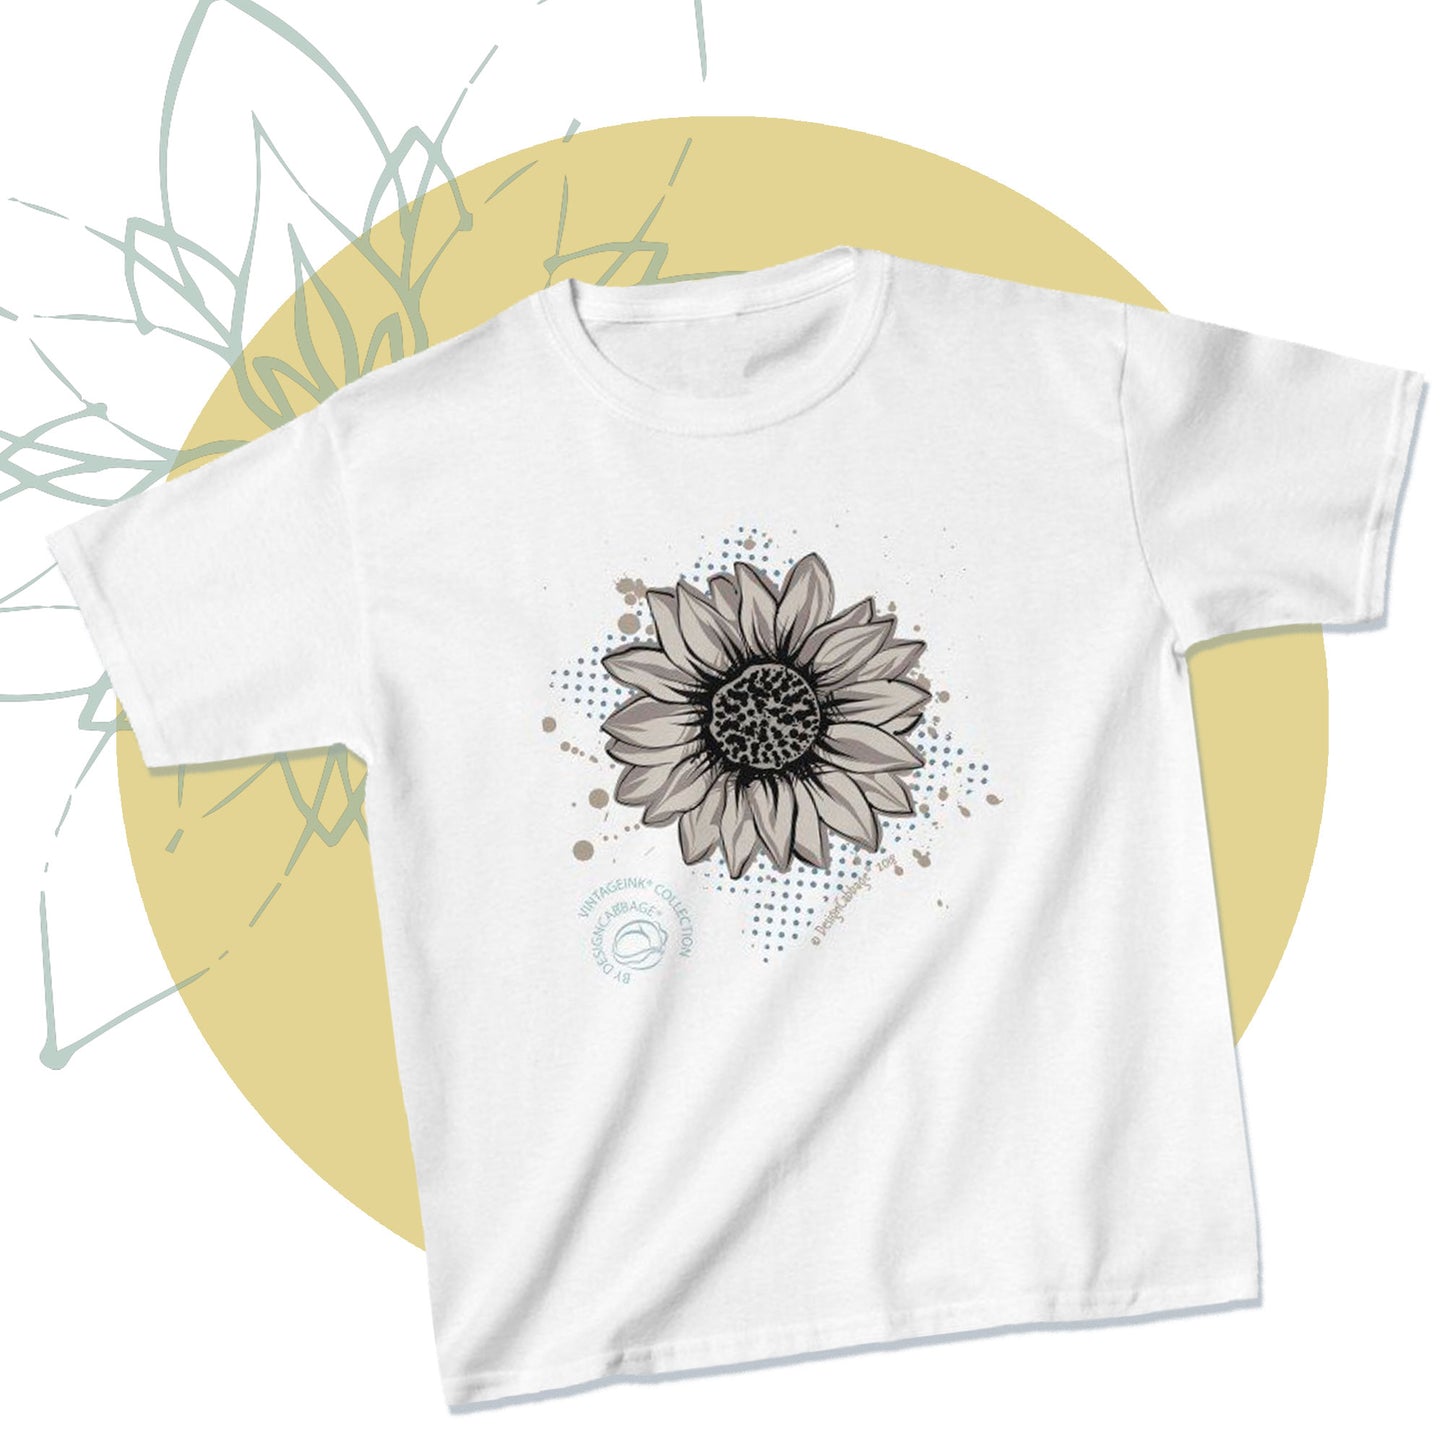 Sunflower Graphic T-Shirt - VintageInk® Collection - Kids' Tee